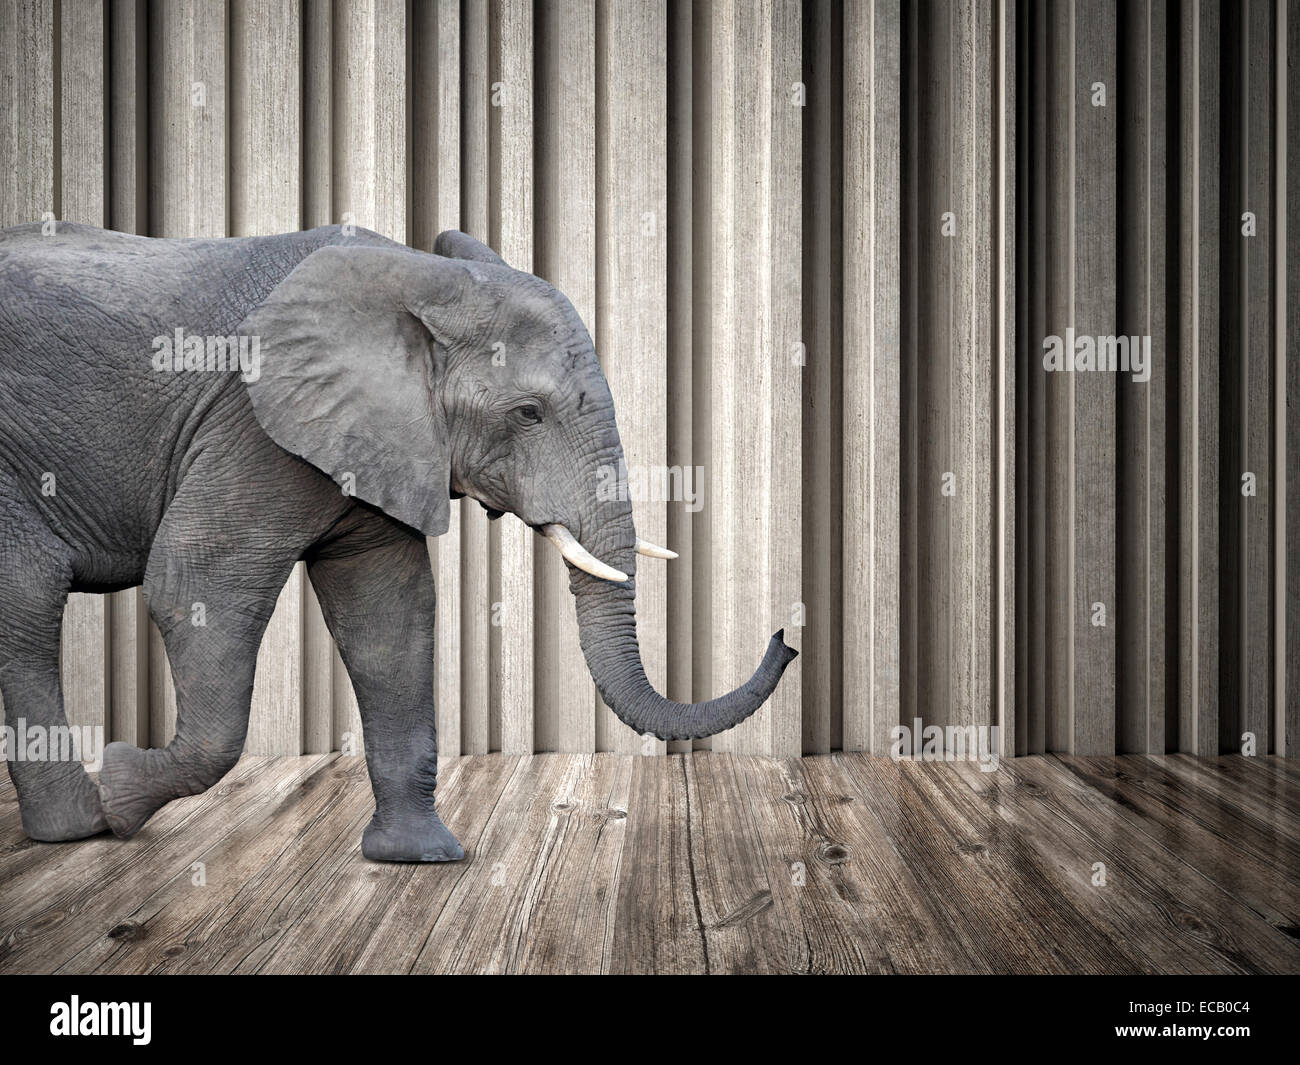 Elefant 3d -Fotos und -Bildmaterial in hoher Auflösung – Alamy